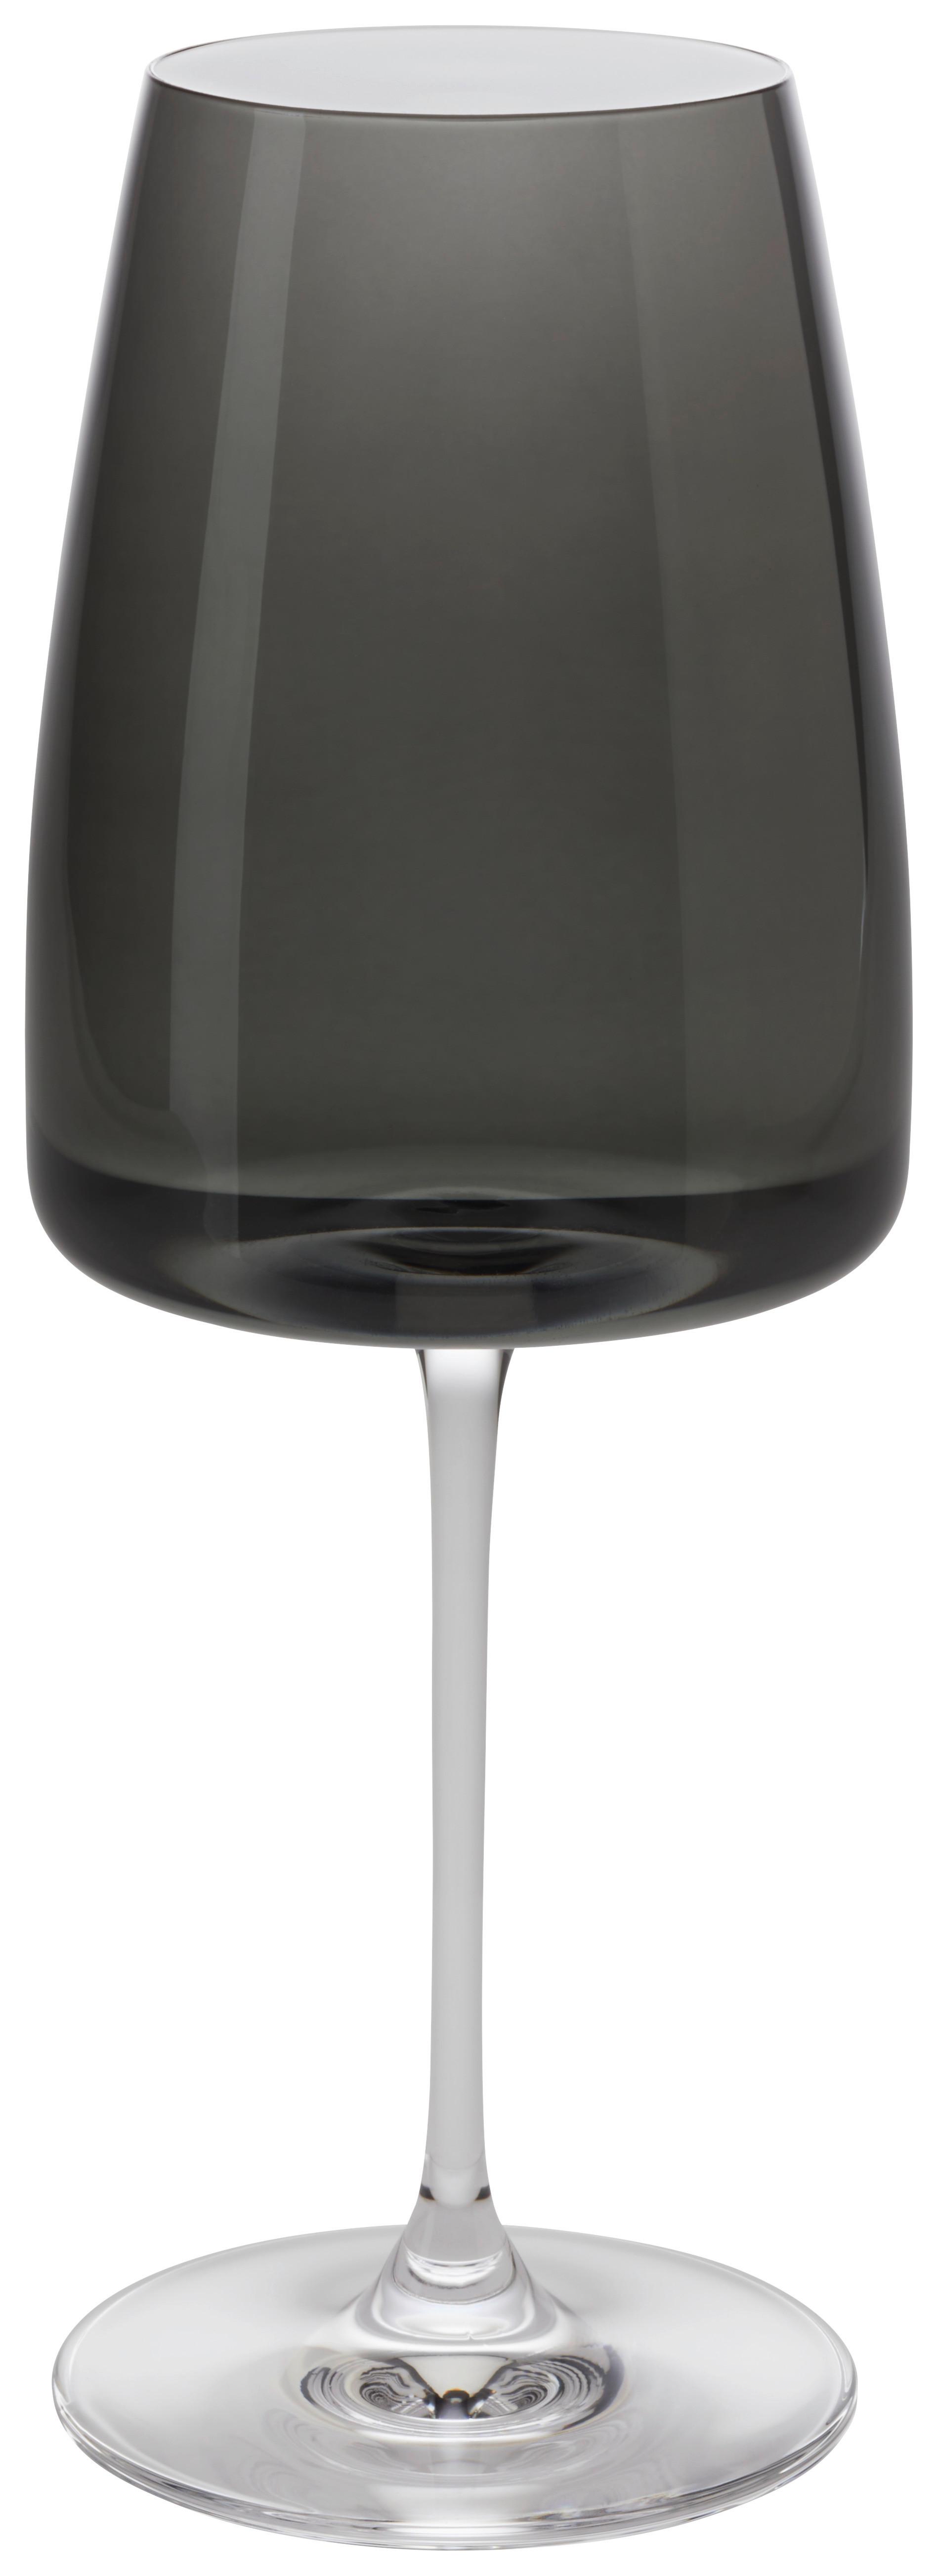 Rotweinglas Nicki ca. 510ml - Schwarz, Modern, Glas (8,5/23cm) - Premium Living